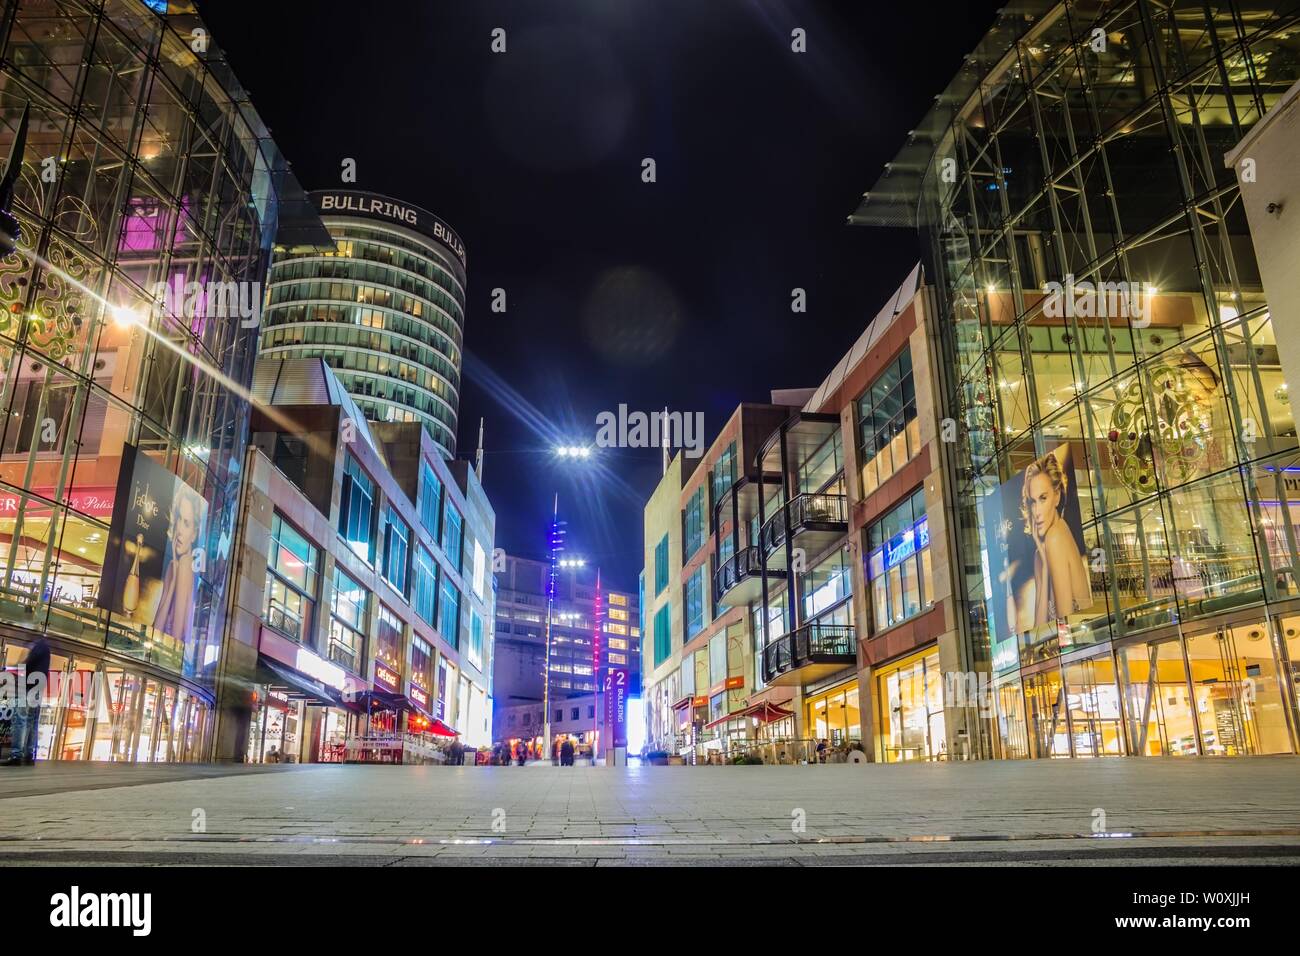 Bullring night lights in Birmingham city centre UK Stock Photo